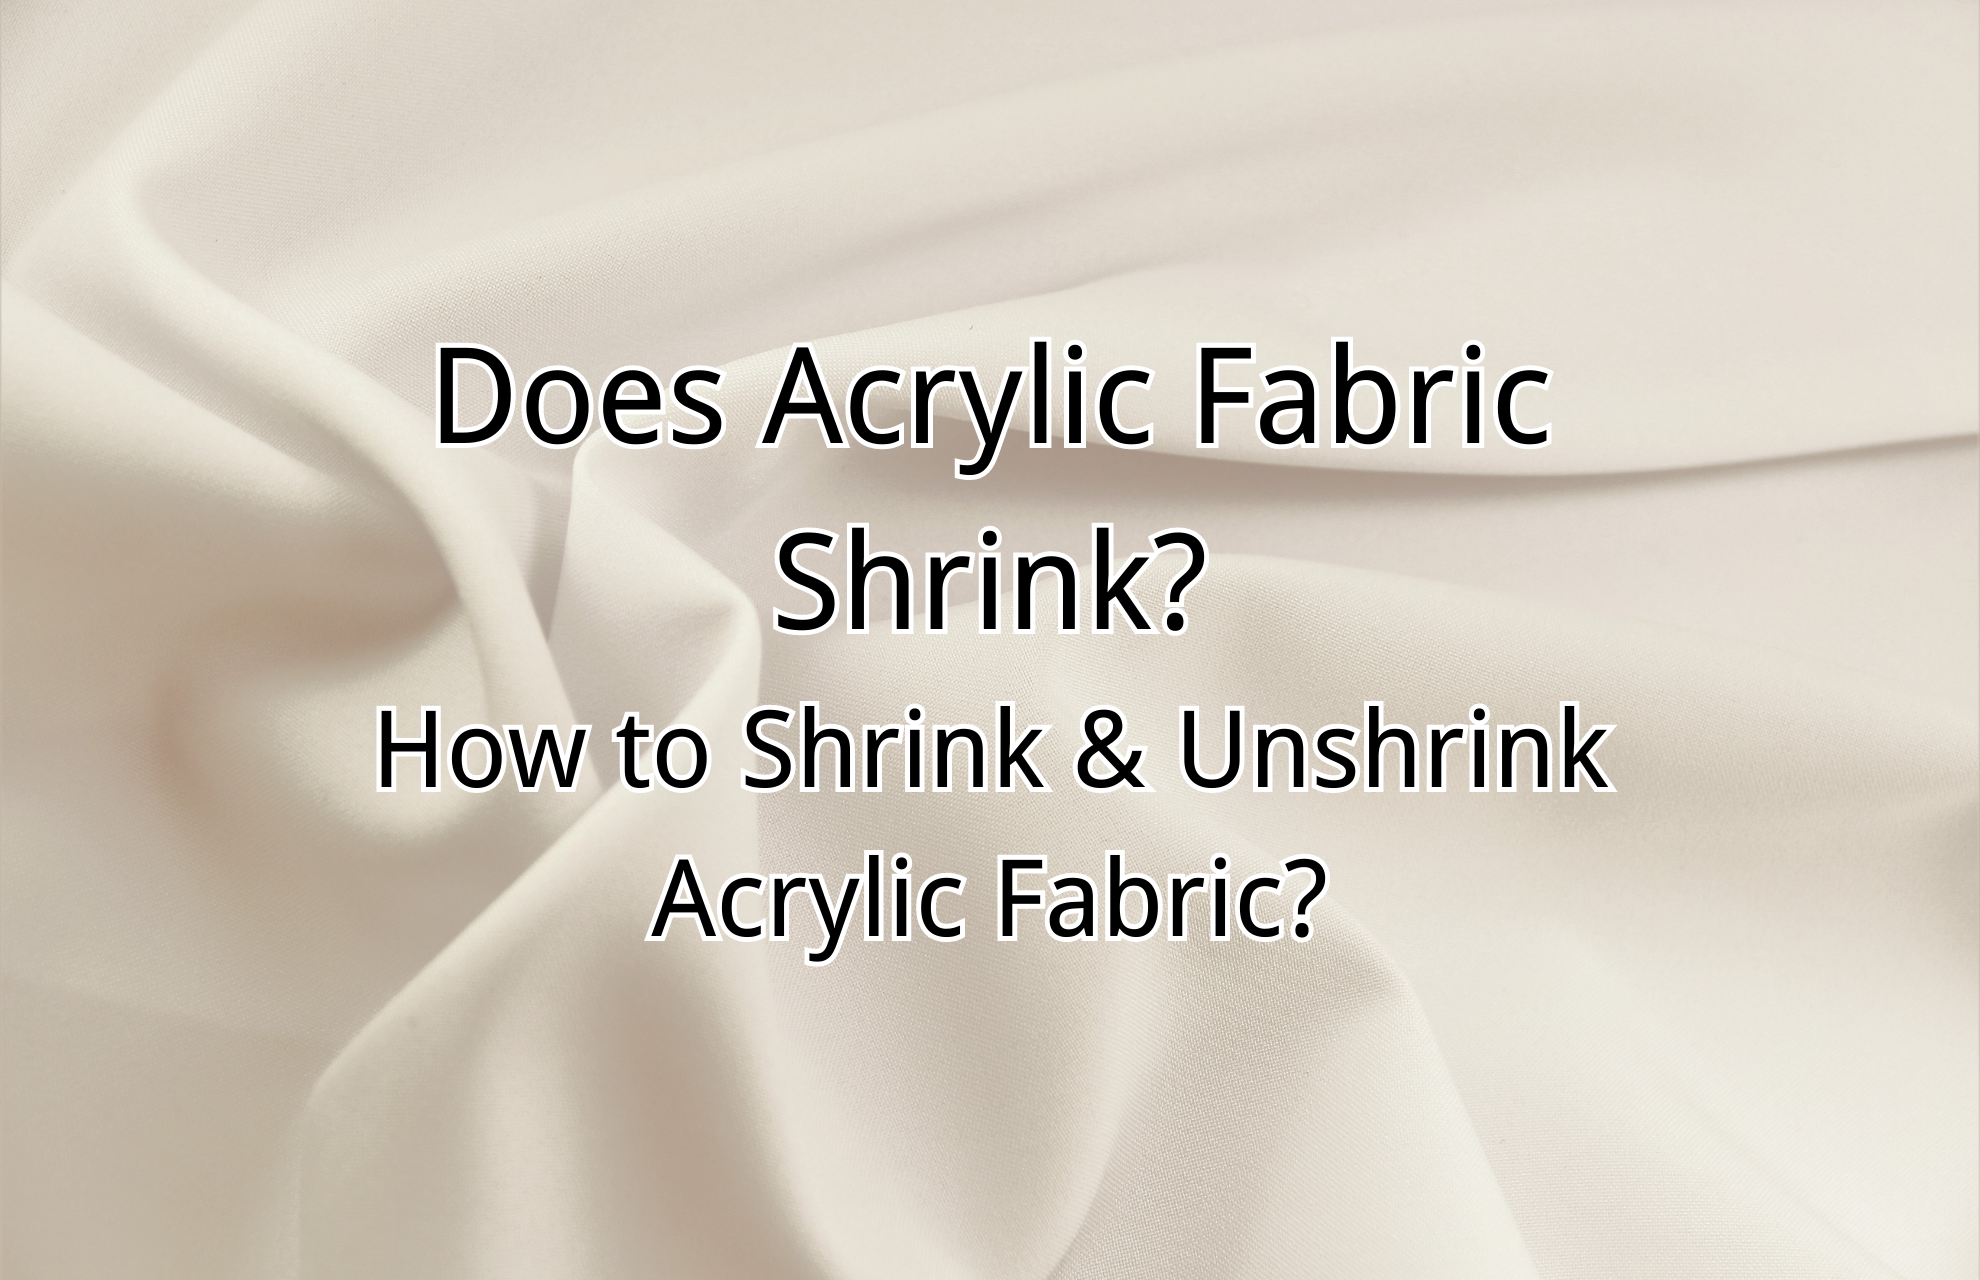 Does Acrylic Fabric Shrink? How to Shrink & Unshrink Acrylic Fabric?